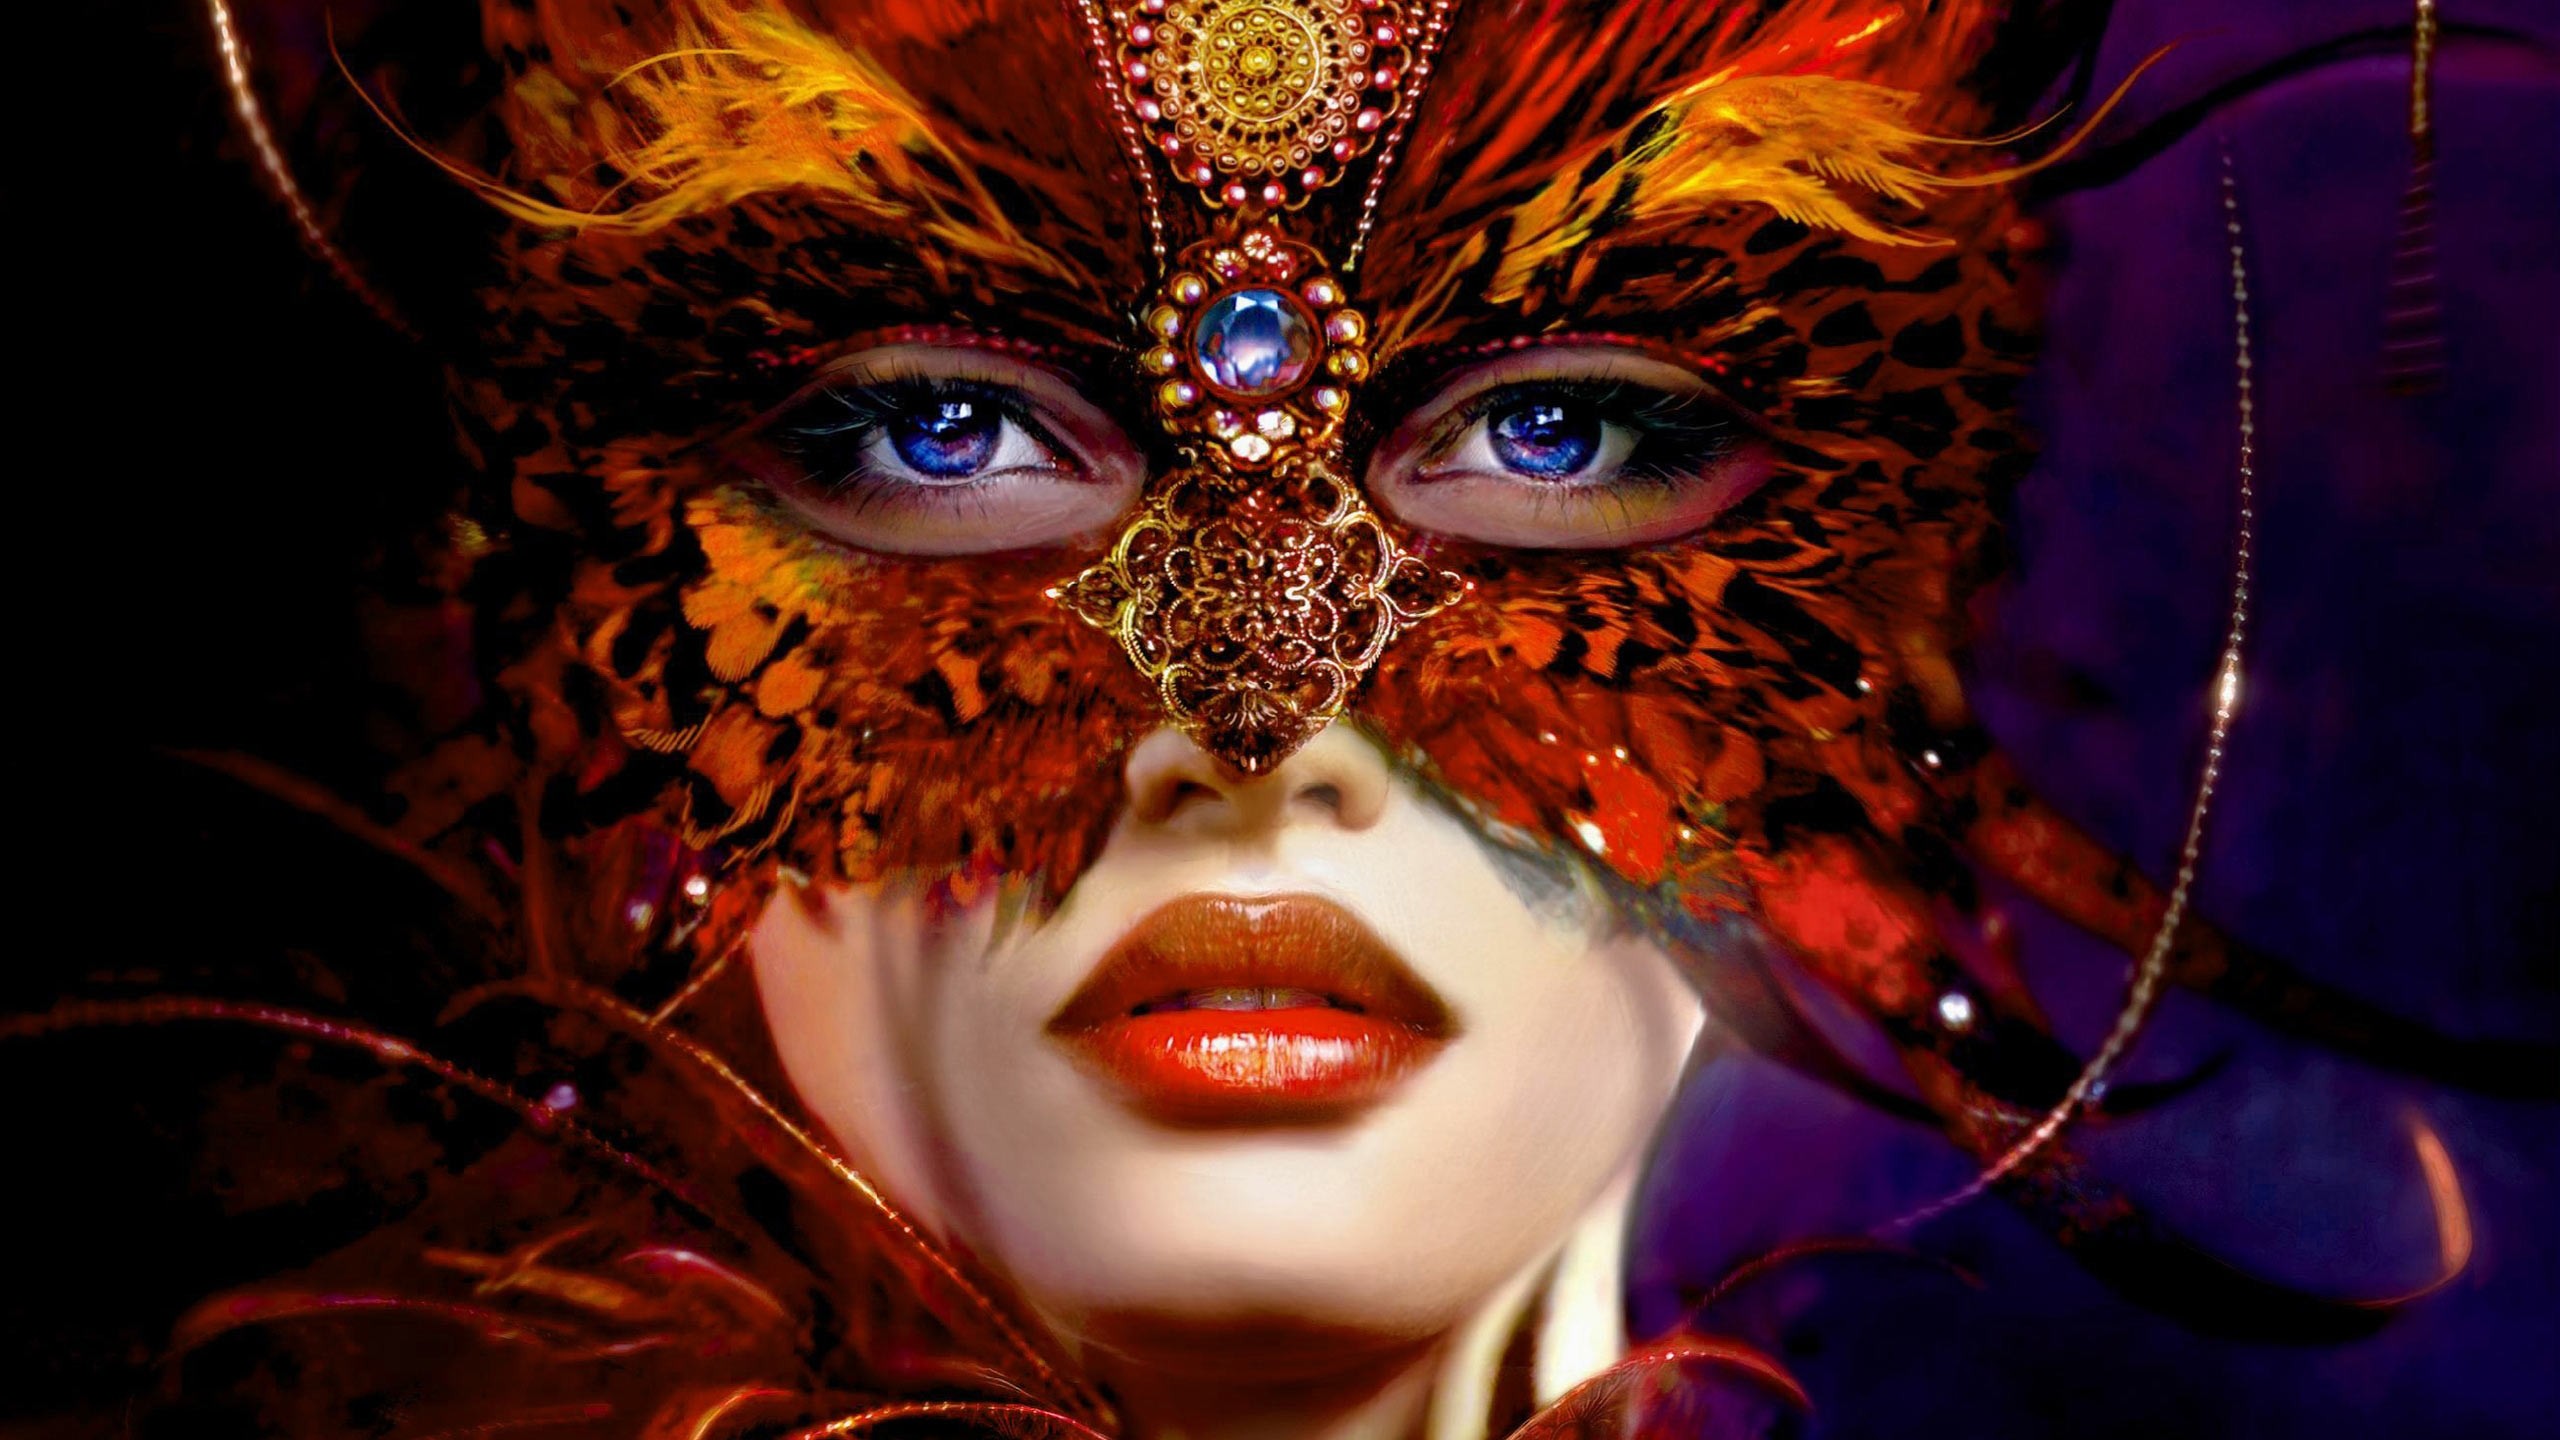 Mask Carnival Venice 2018 - HD Wallpaper 